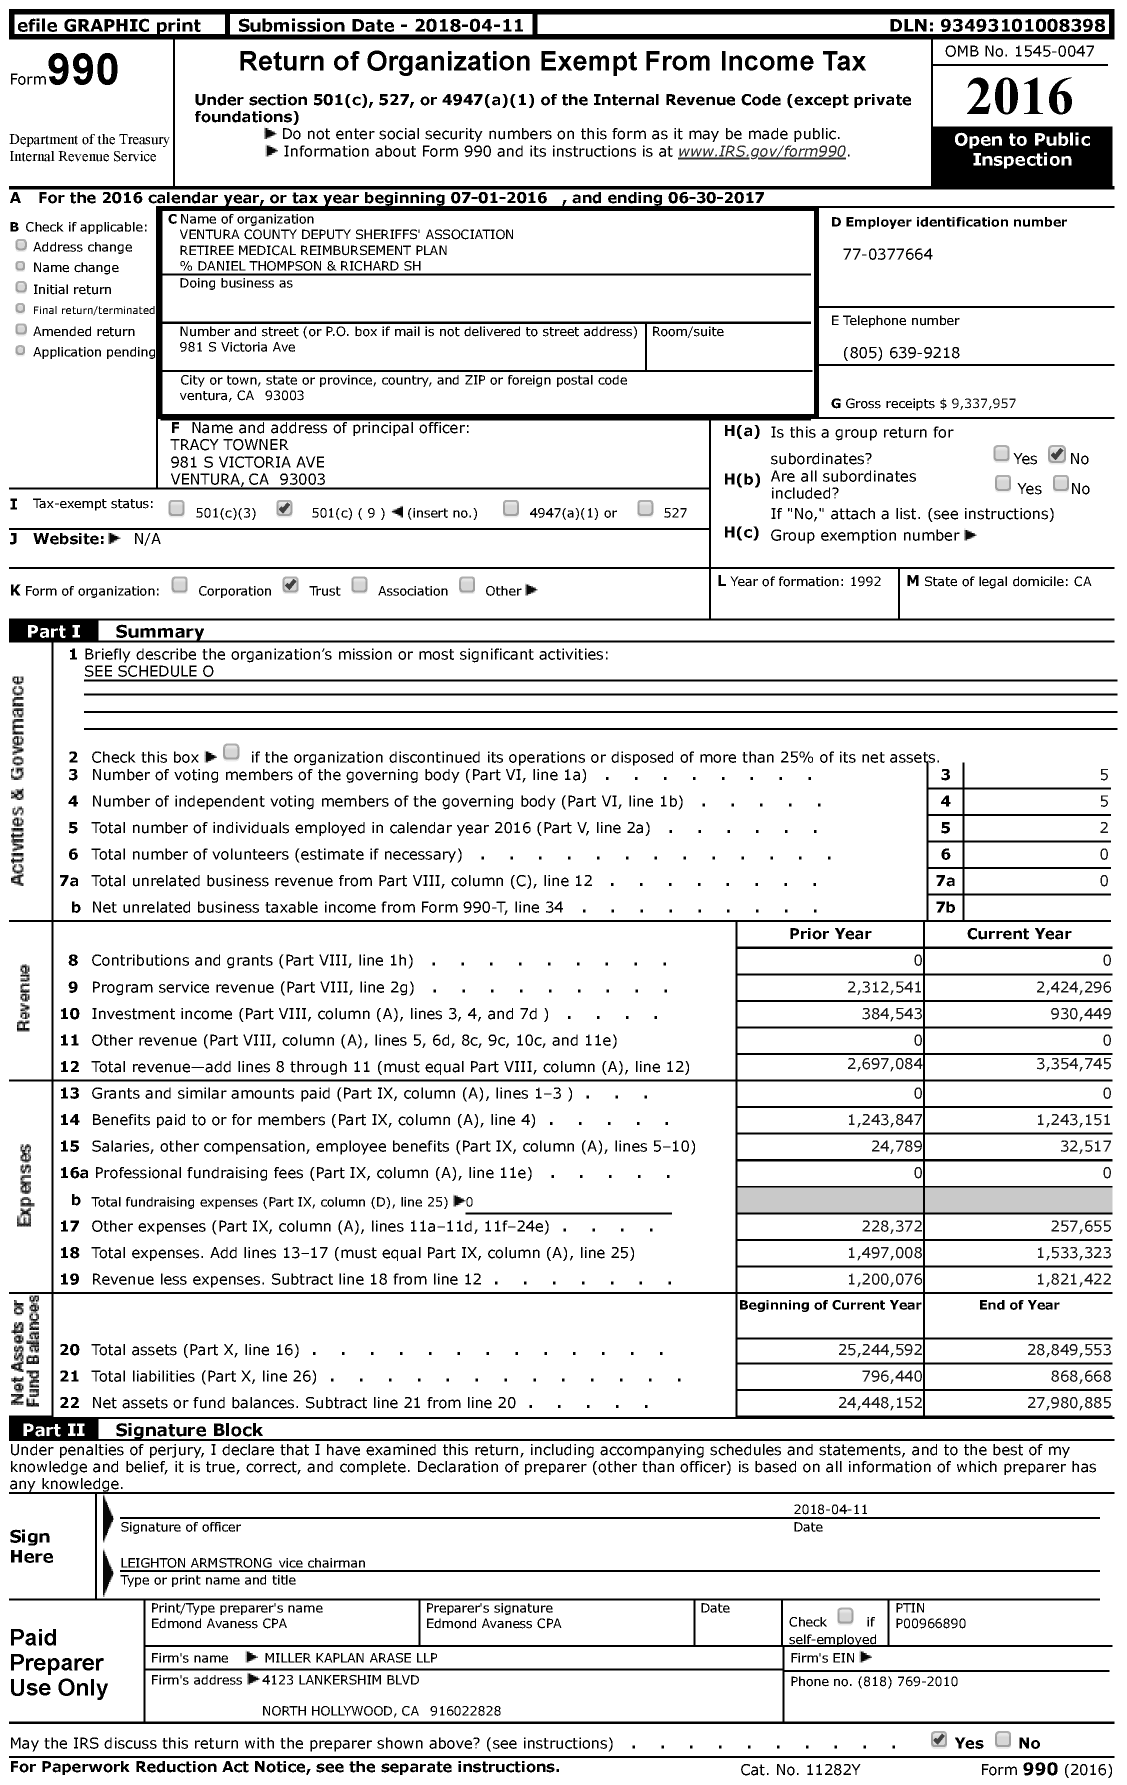 Image of first page of 2016 Form 990 for Ventura County Deputy Sheriffs' Association Retiree Medical Reimbursement Plan